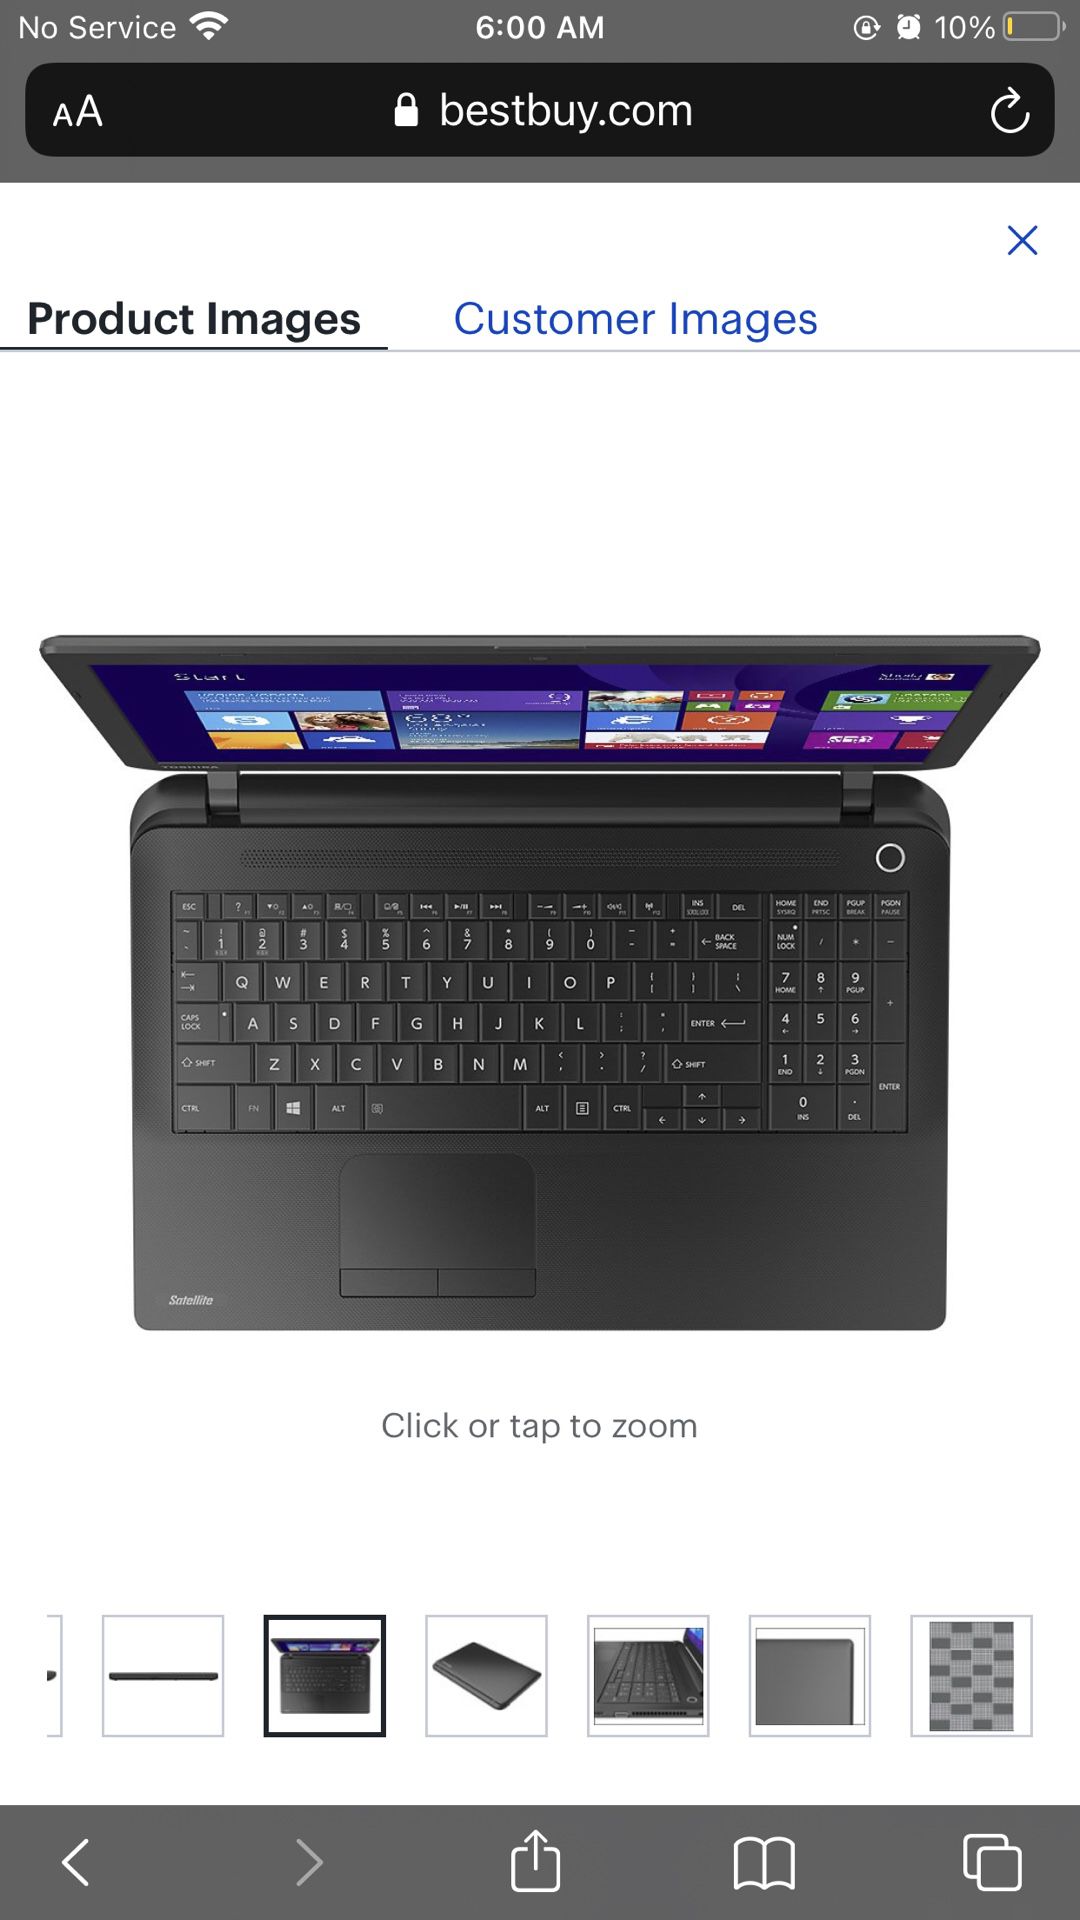 Toshiba - Satellite 15.6" Laptop - AMD A8-Series - 4GB Memory - 500GB Hard Drive - Jet Black